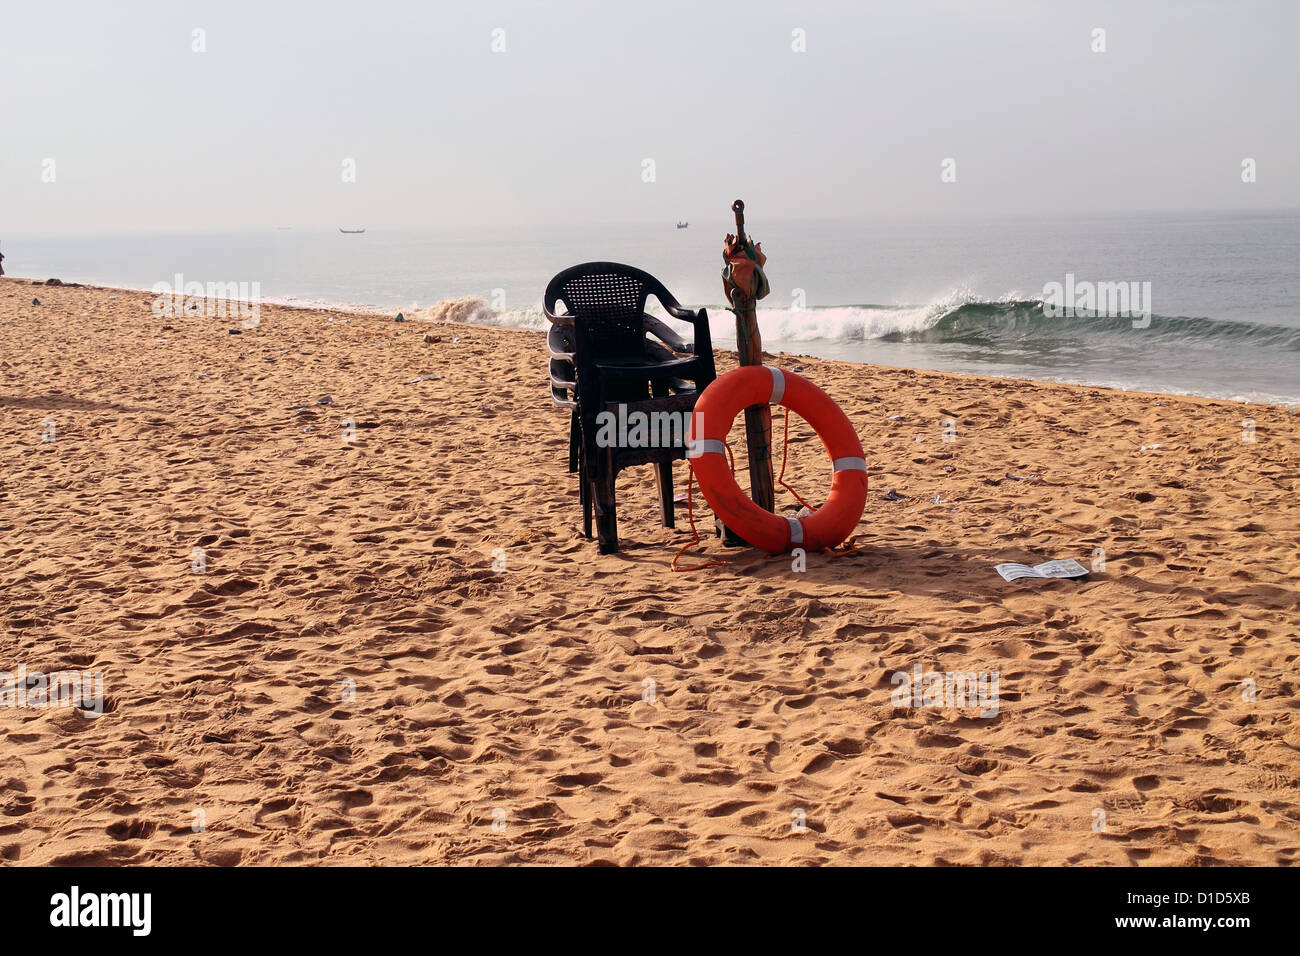 Lifeguard's chair and Umbrella at Shanghumugham beach, Trivandrum, kerala, India Stock Photo